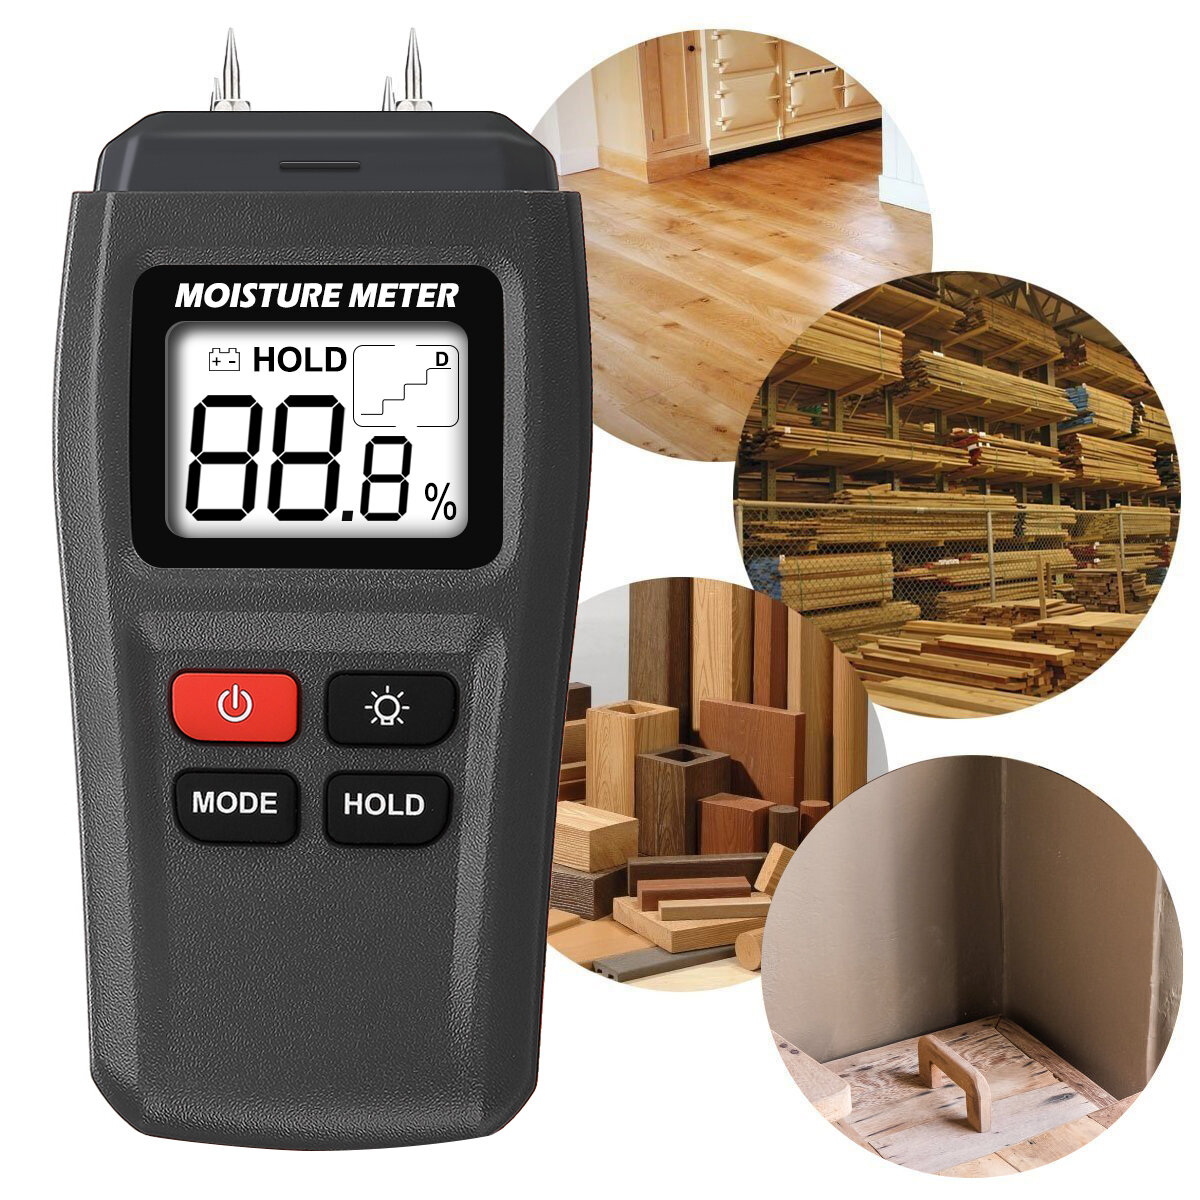 Mt15 0 - 99.9% lcd digital display needle type wood moisture meter with backlight function